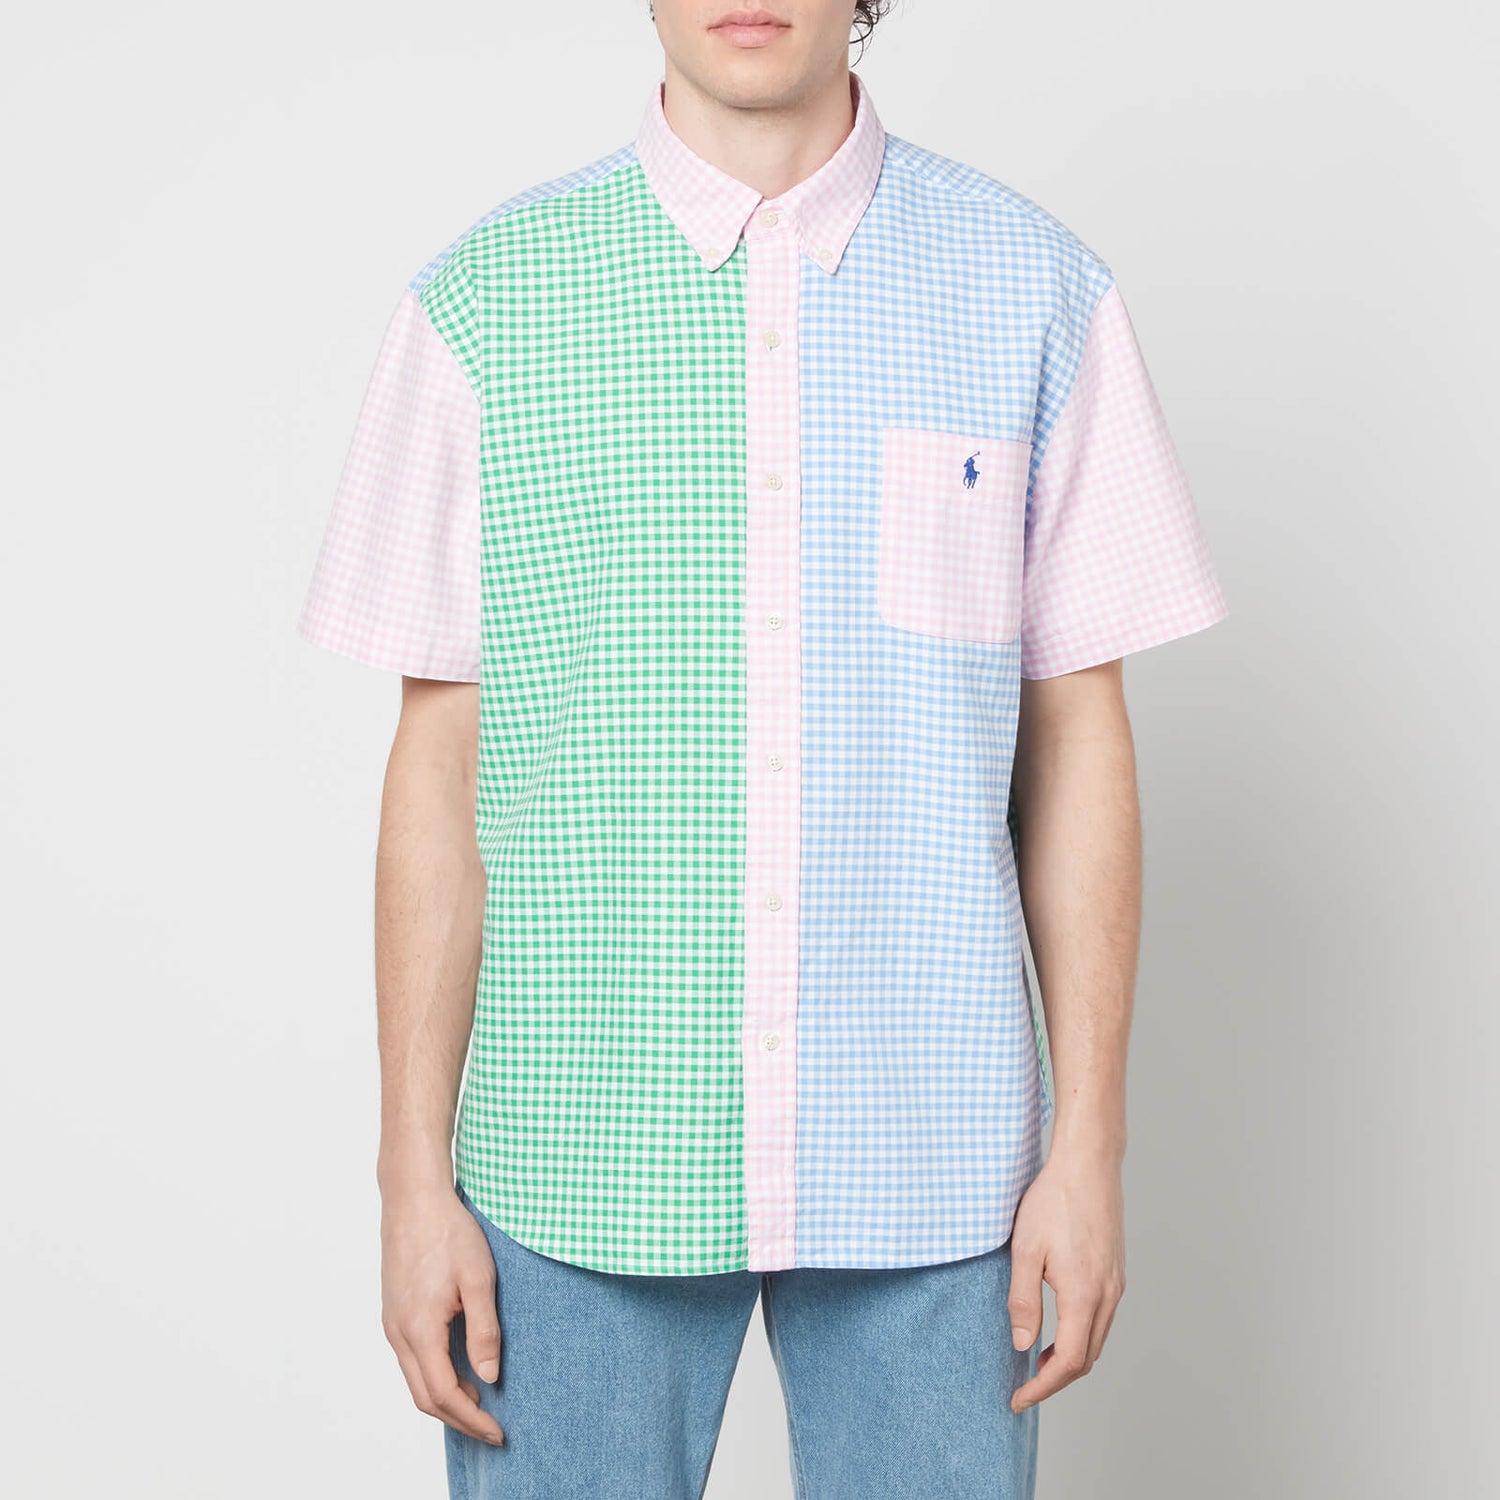 Polo Ralph Lauren Gingham Oxford Cotton Shirt - S